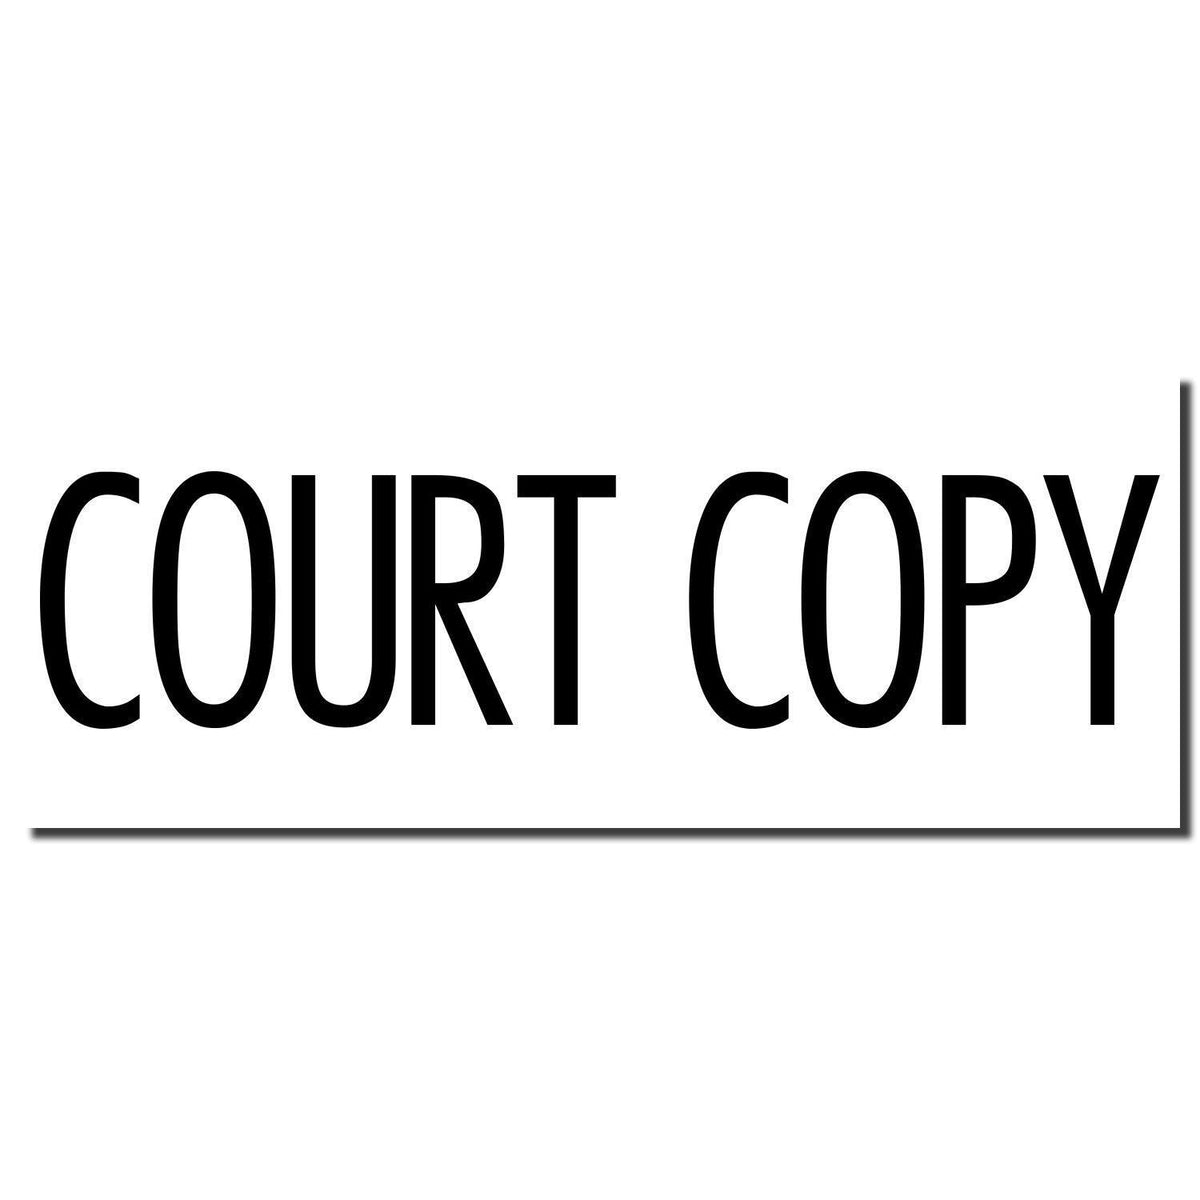 Enlarged Imprint Large Narrow Font Court Copy Rubber Stamp Sample